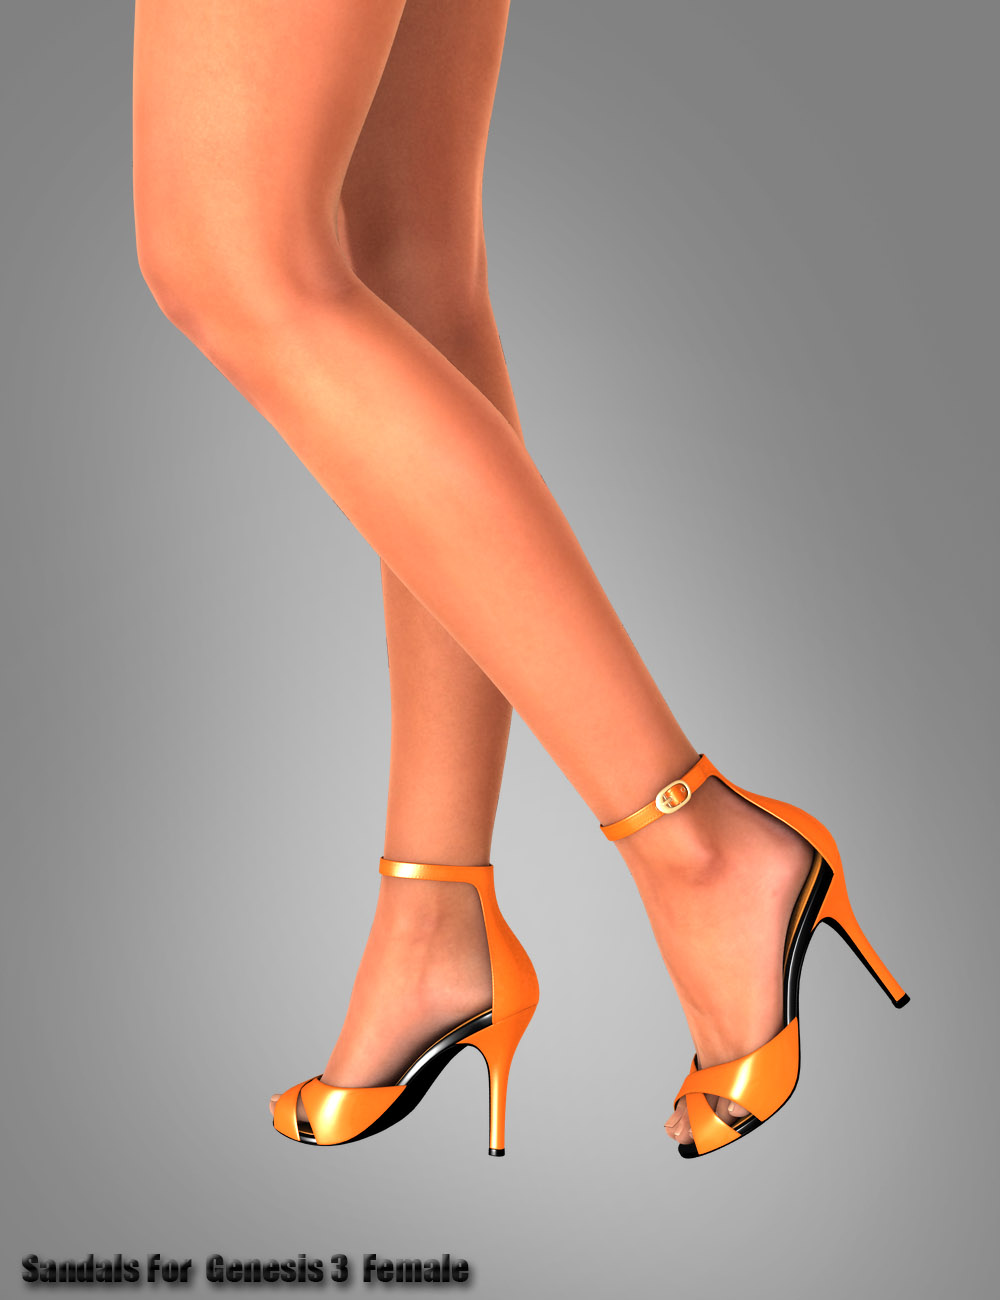 Sandals for Genesis 3 Female(s) by: dx30, 3D Models by Daz 3D